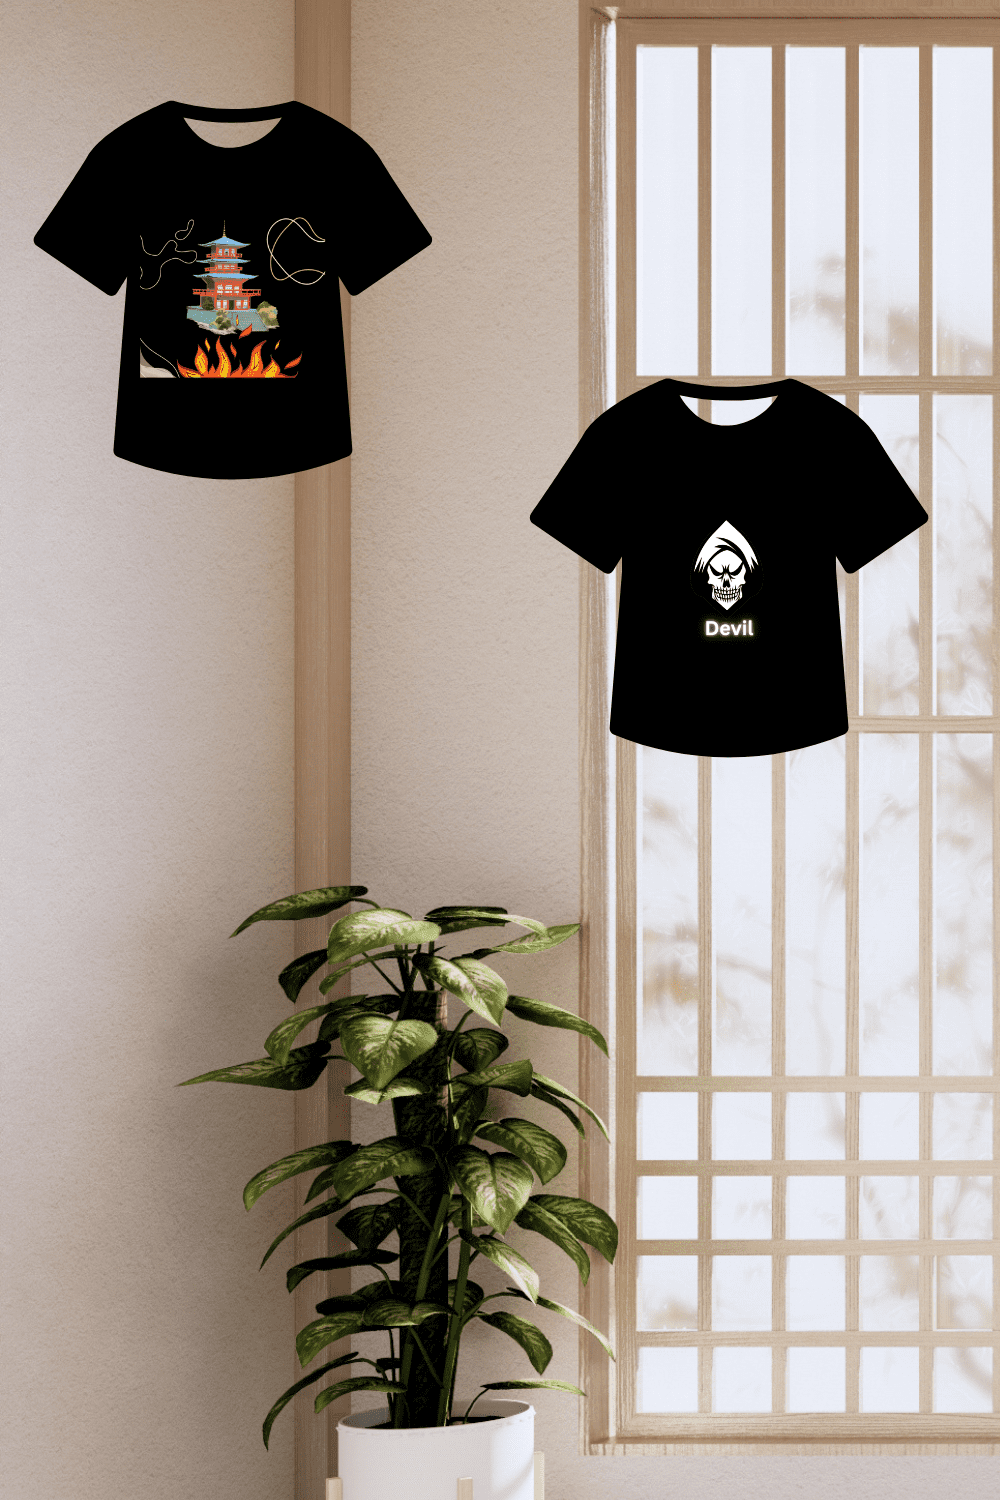 t shirts new designs | T shirt design bad boys pinterest preview image.